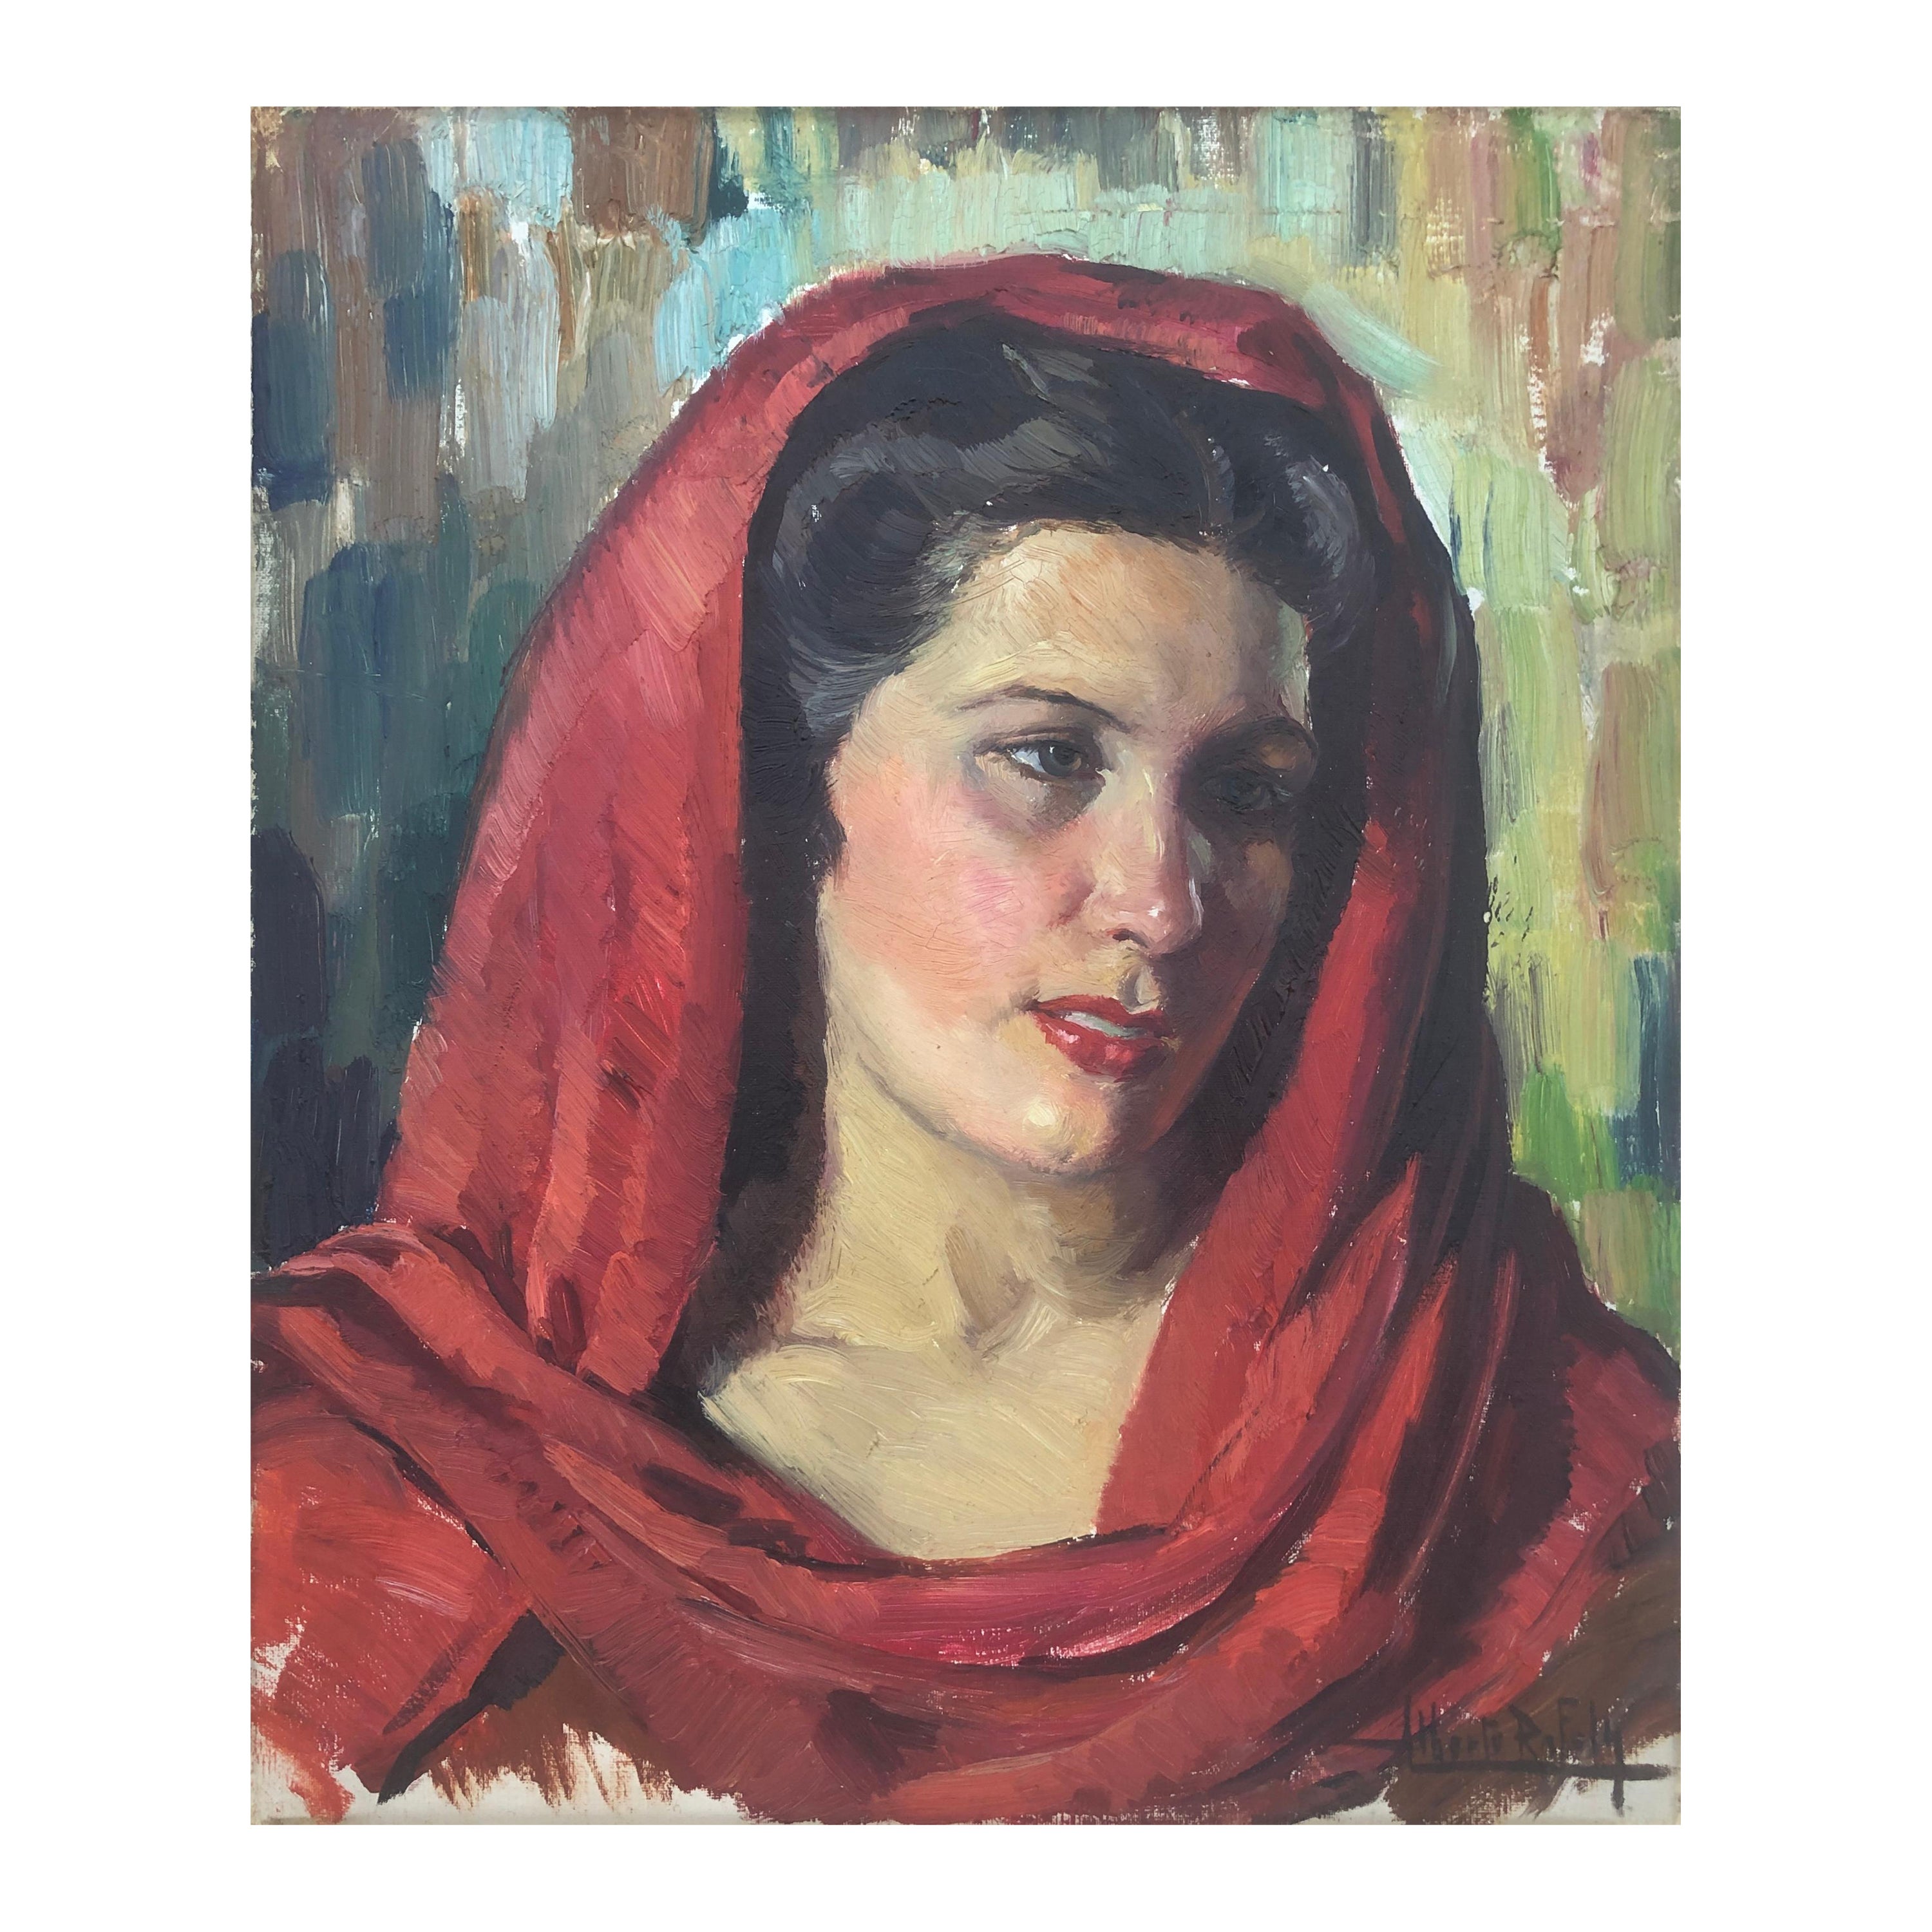 Albert Rafols Culleres Portrait Painting – Frau mit Kopftuch Original Öl auf Leinwand Gemälde